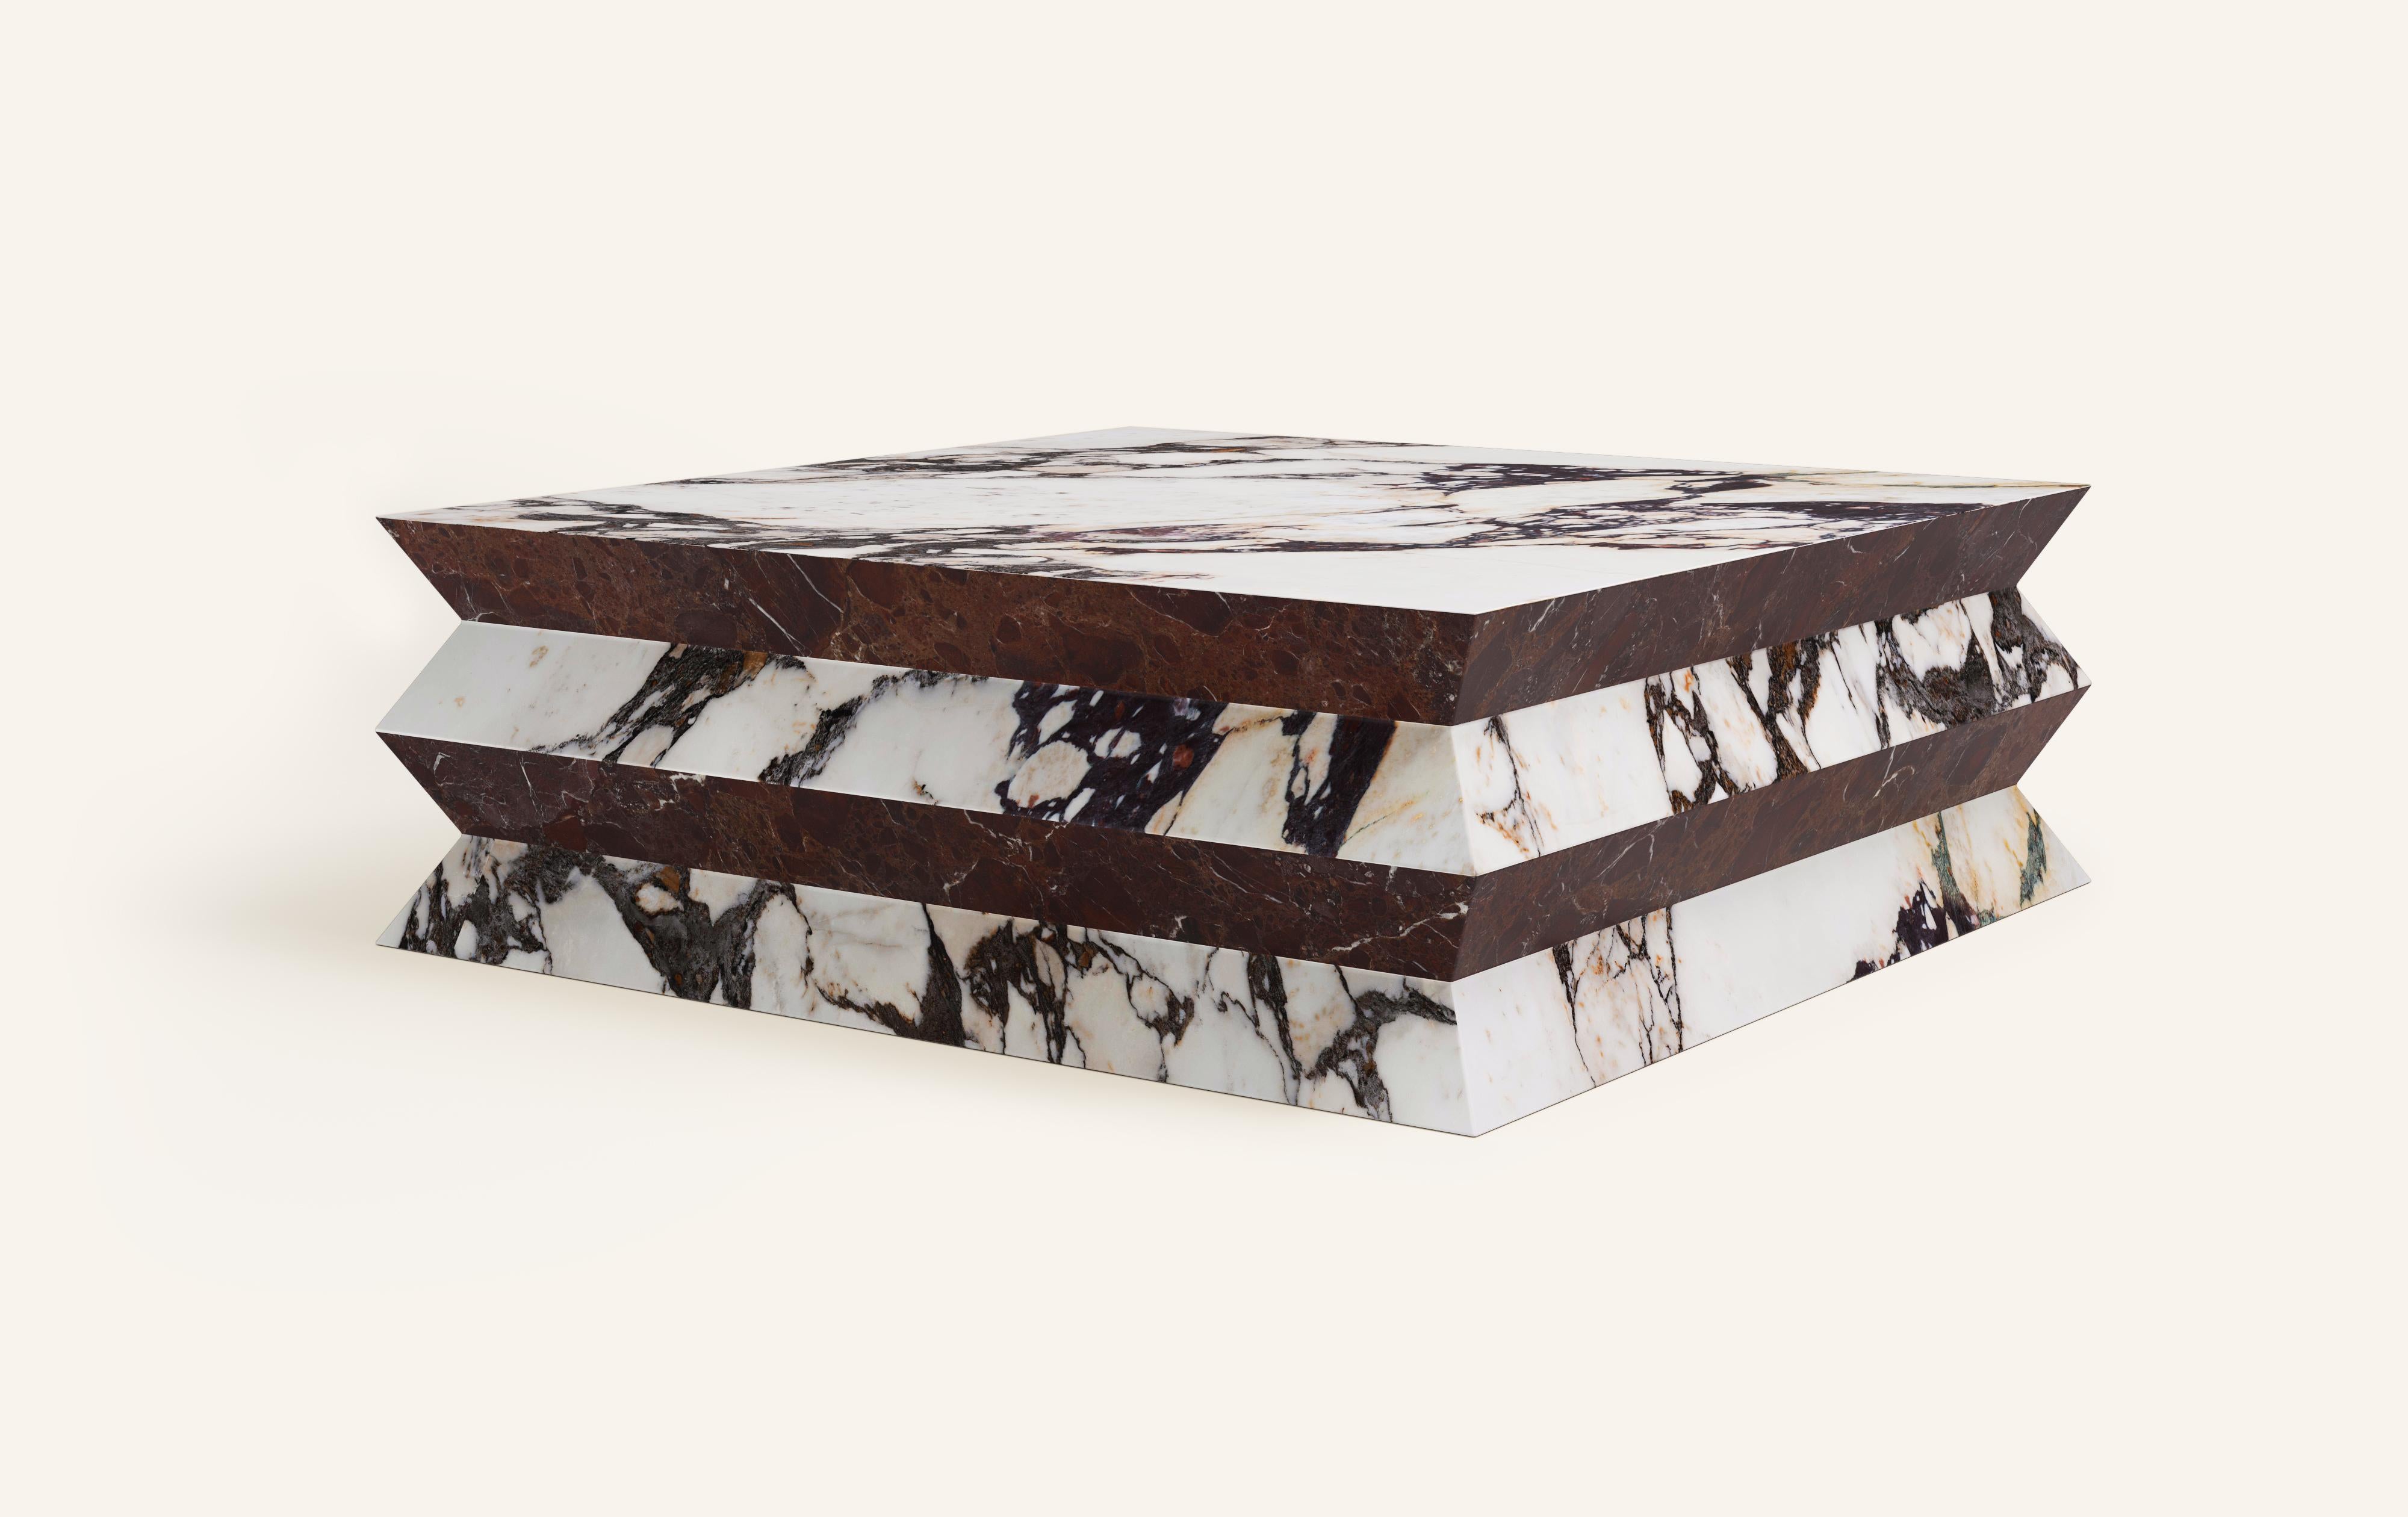 Organique FORM(LA) table basse carrée Grinza 54 po. (L) x 54 po. (L) x 16 po. (H) marbre Calacatta Viola en vente